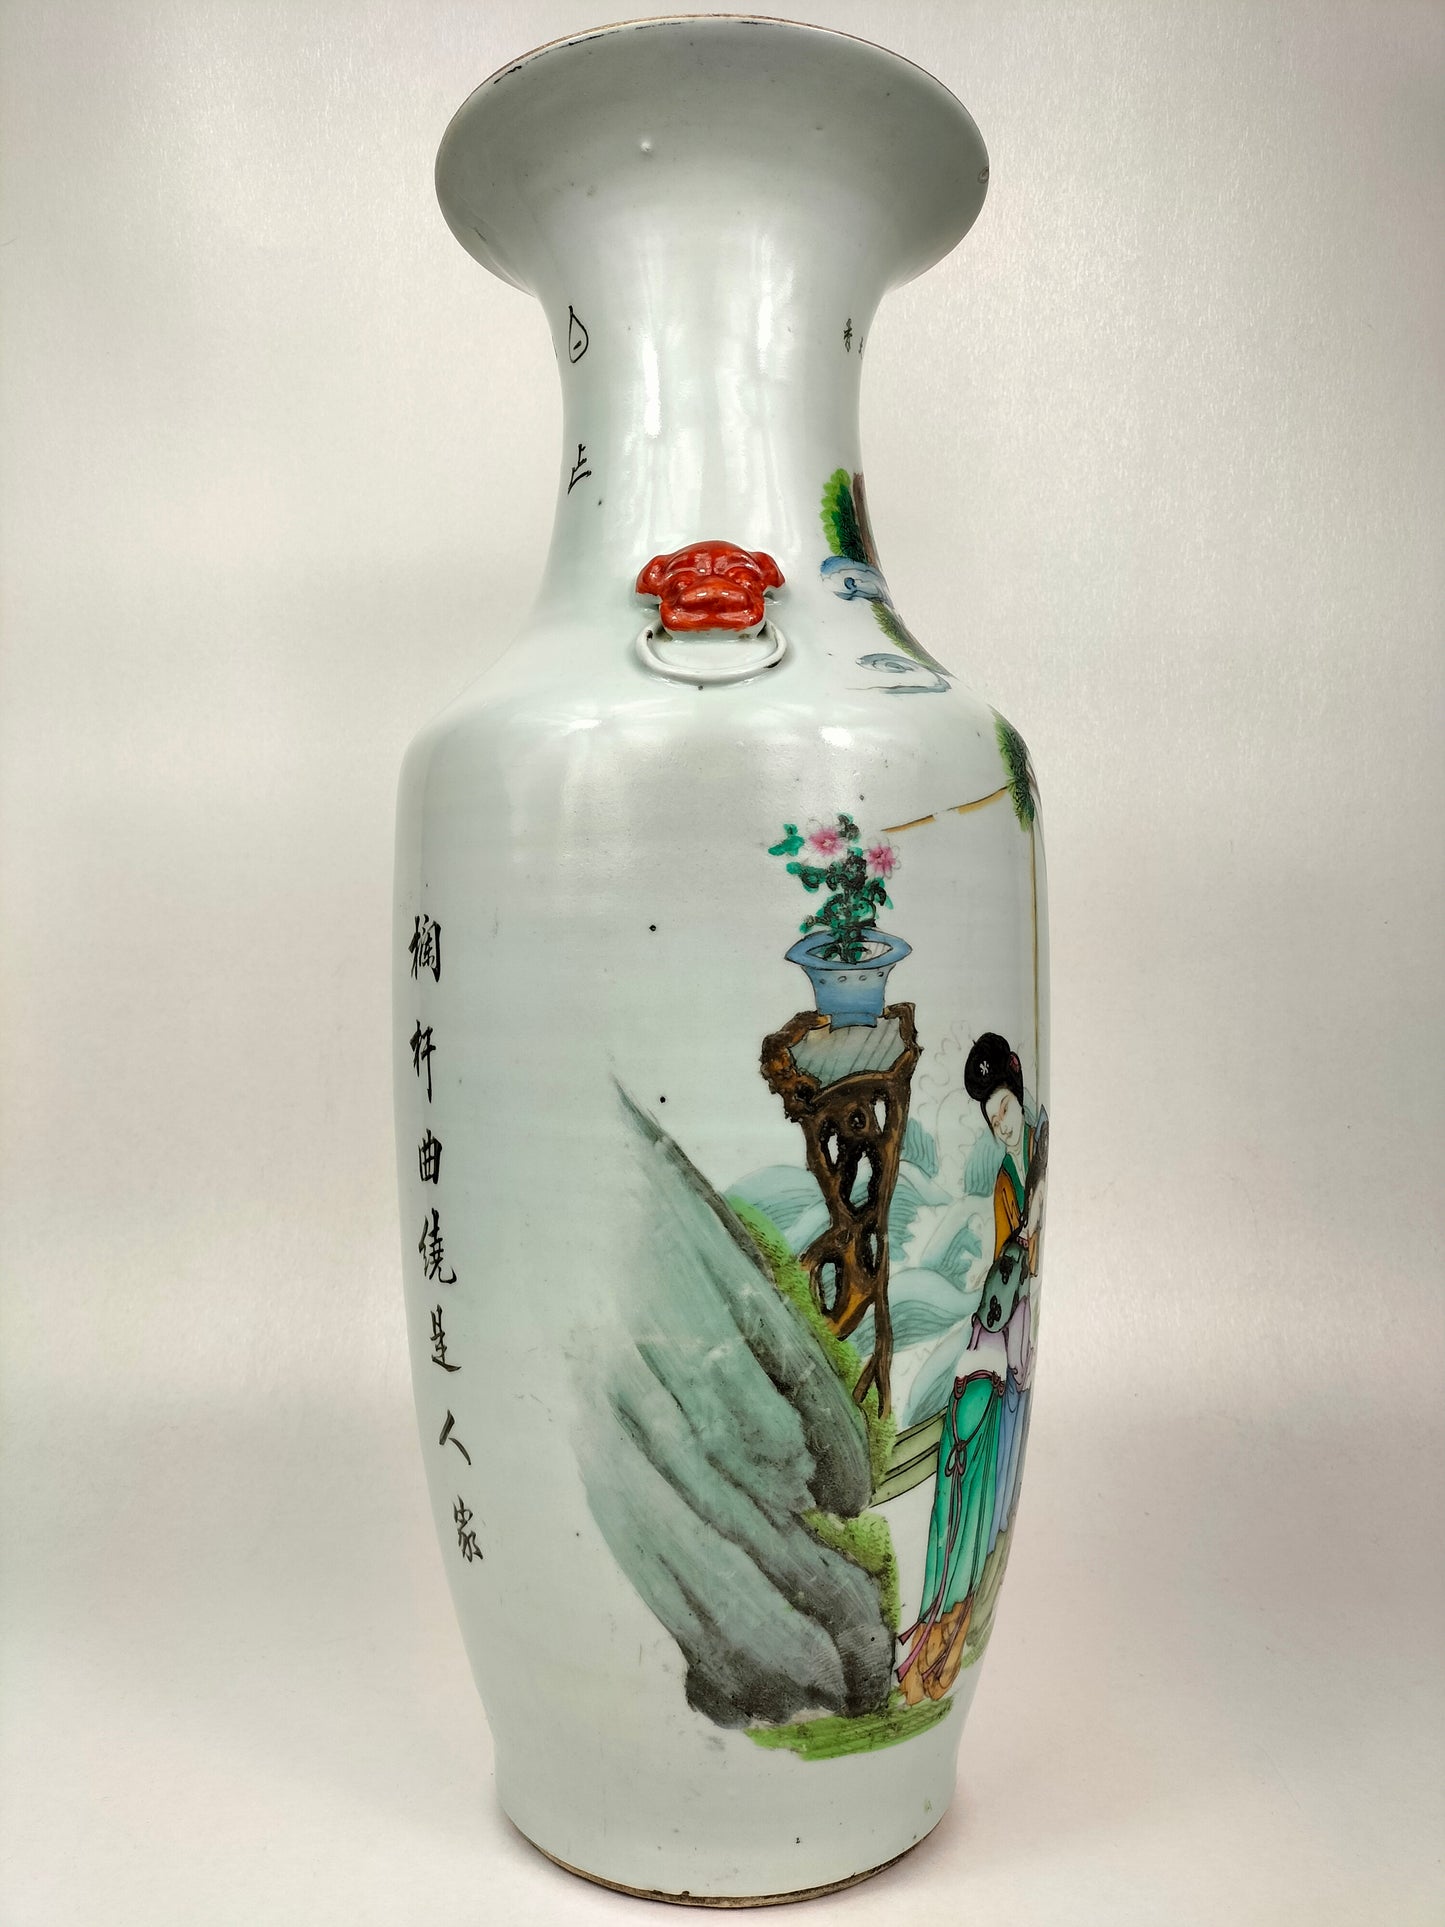 Grand vase antique chinois qianjiang cai // Période République (1912-1949)